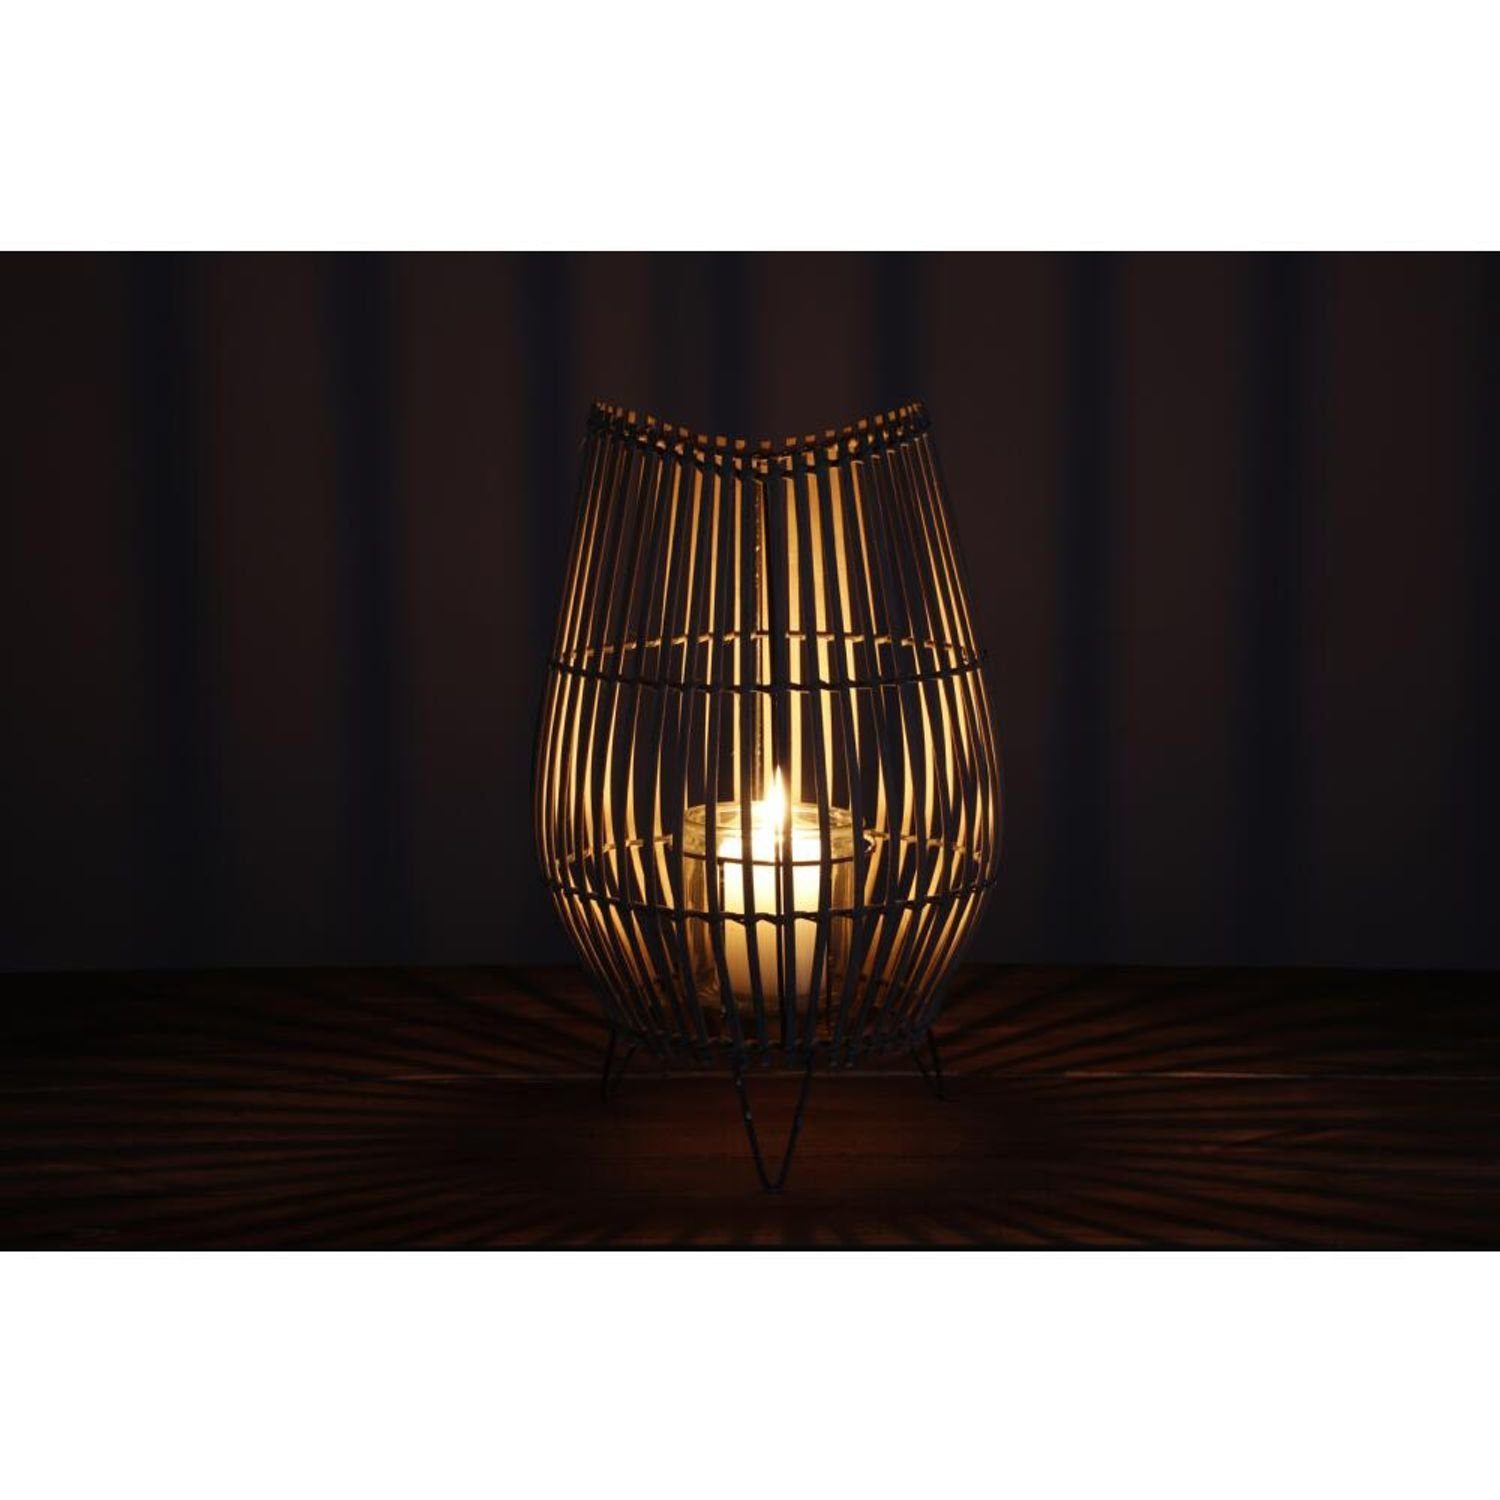 Windlicht Kerzenlaterne Lampe 2x Kerzenhalter Laterne Bambus Beleuch Innendekoration BURI